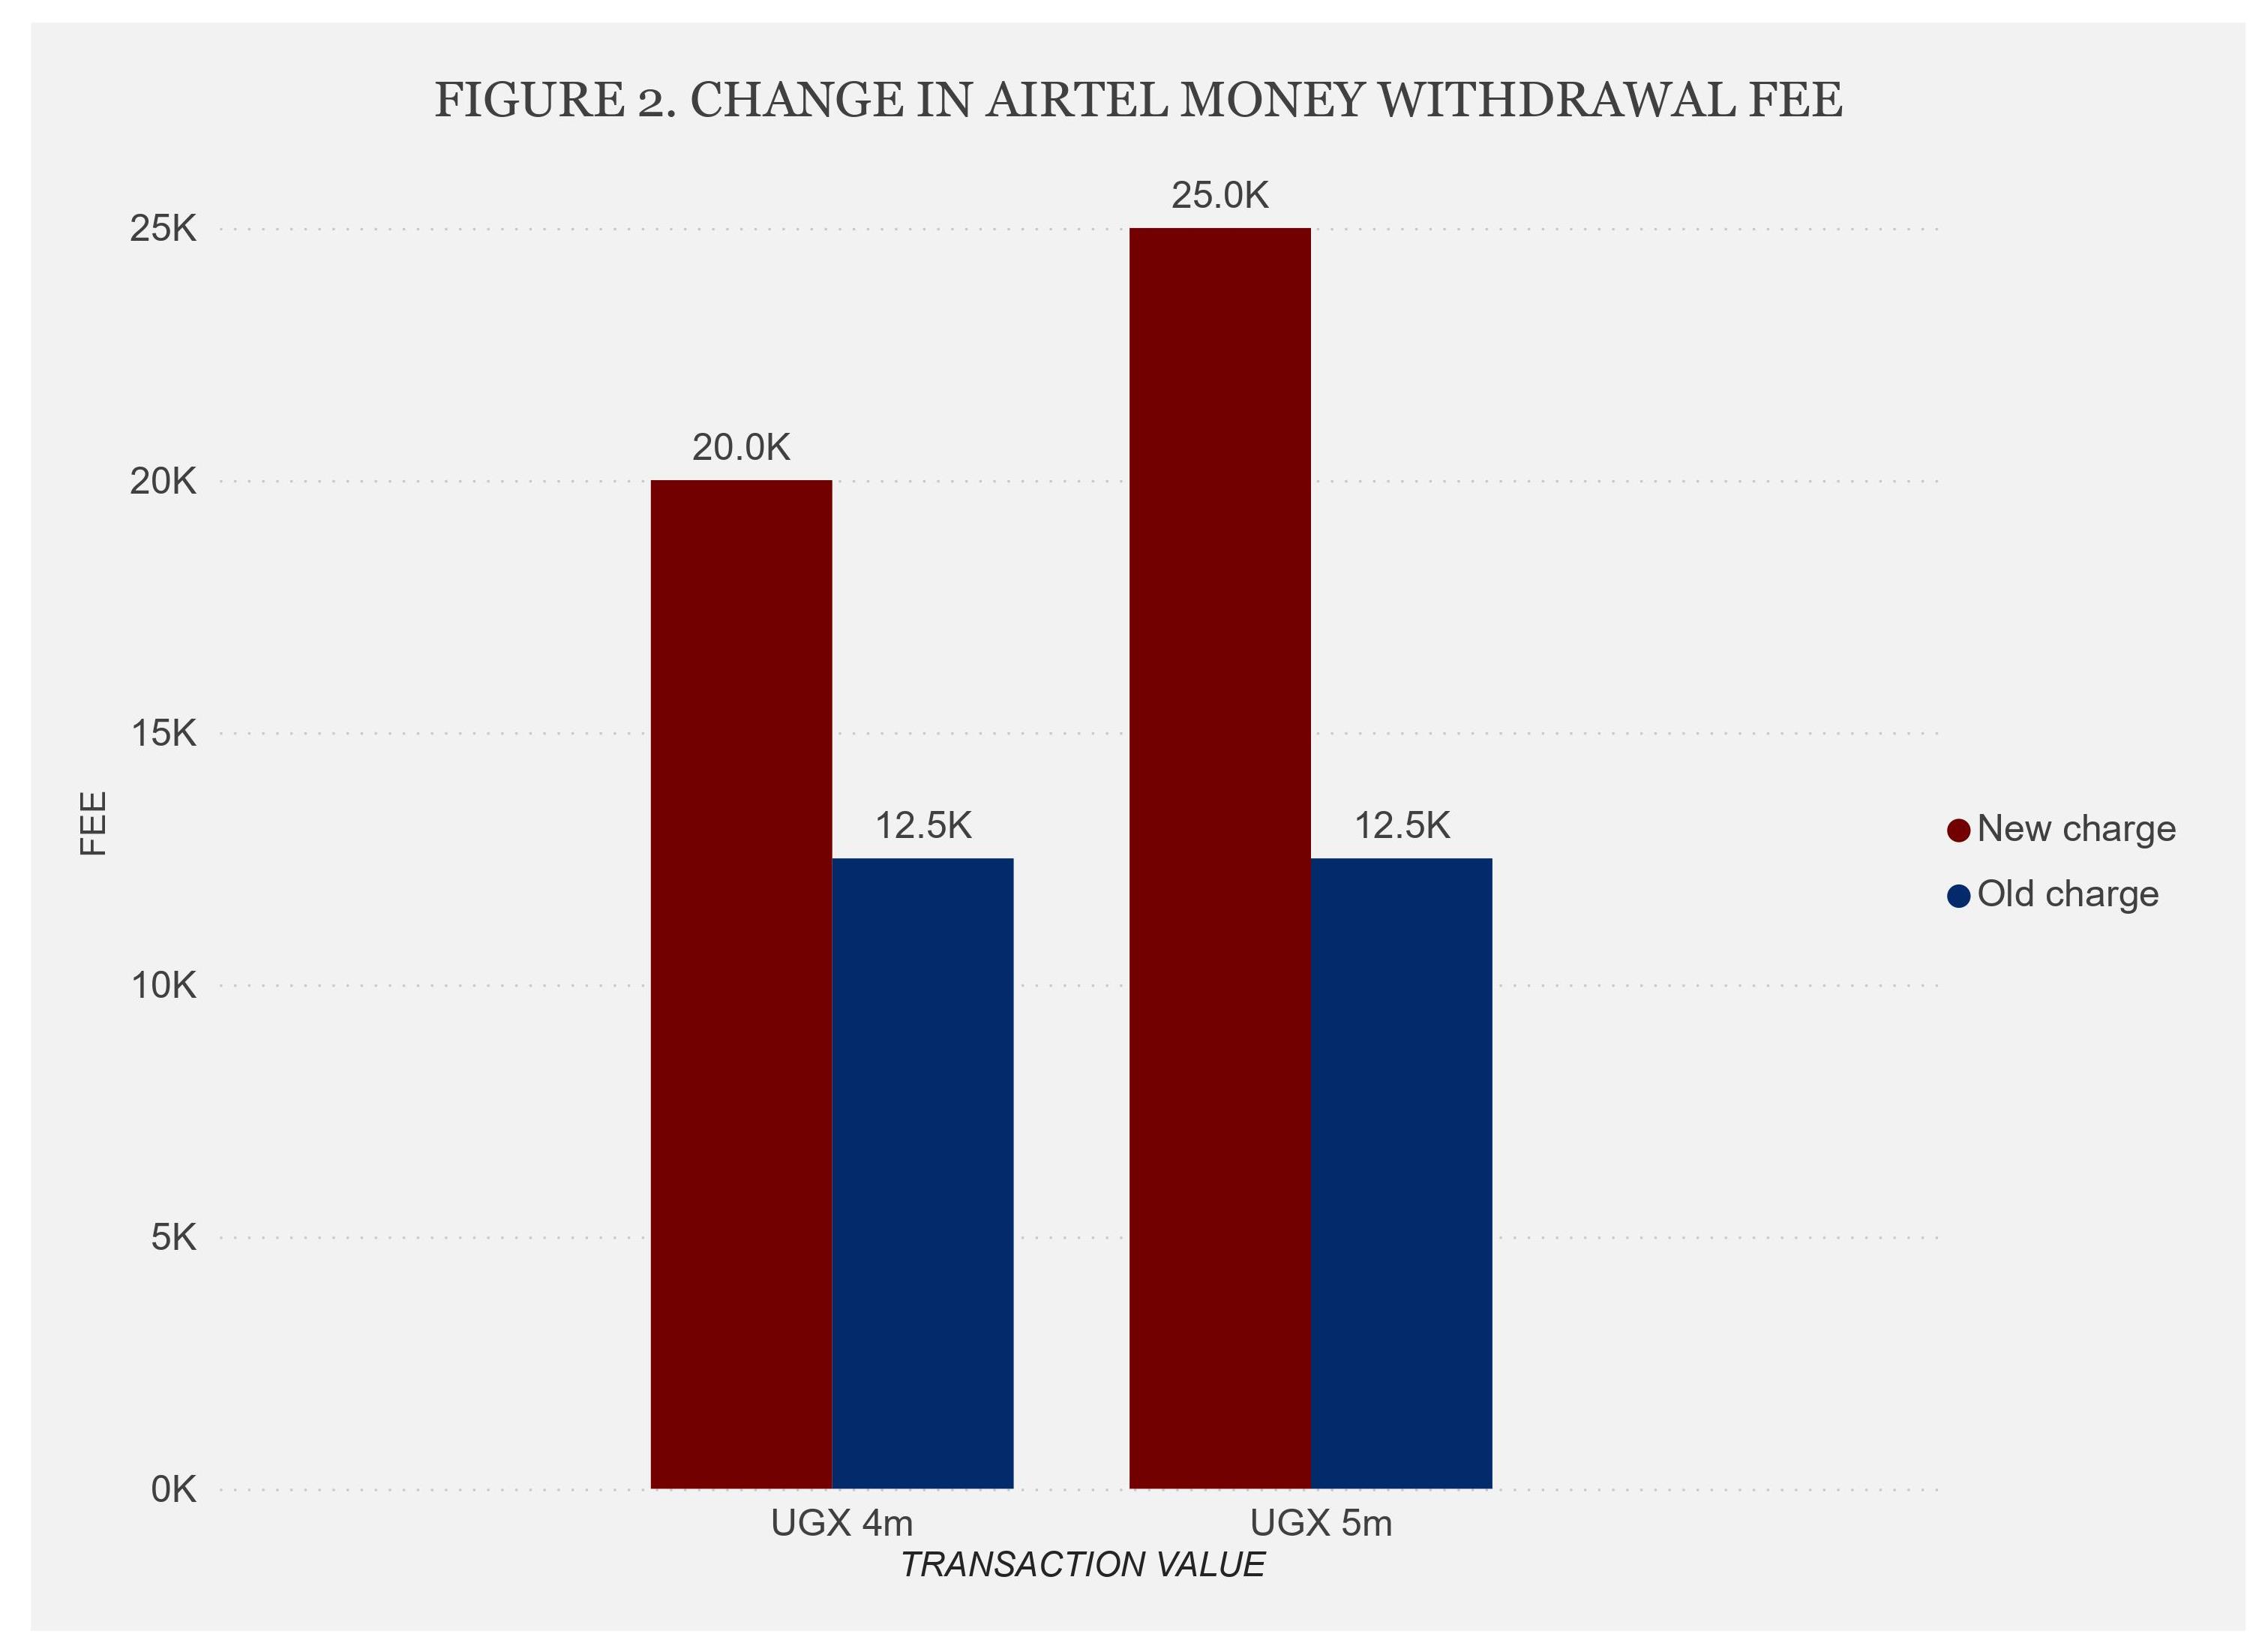 Cambio en la tarifa de retiro de dinero de Airtel